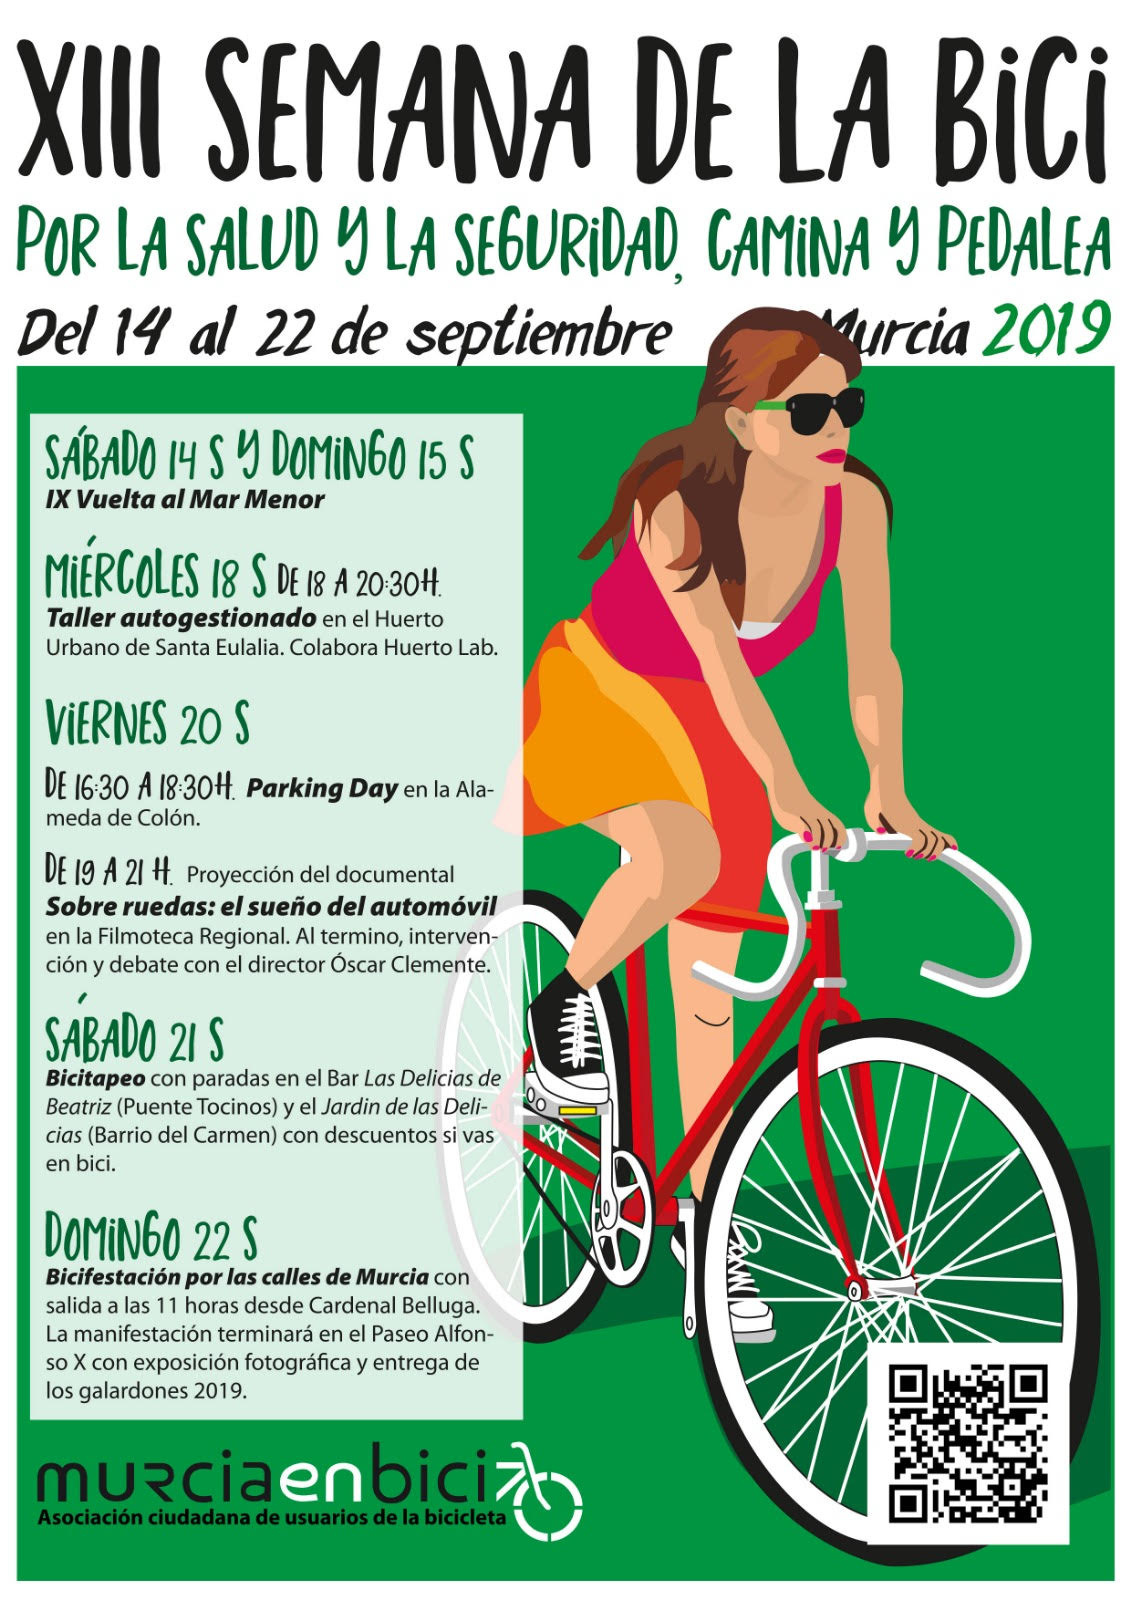 Programa de la XIII Semana de la Bici, con Murcia en Bici